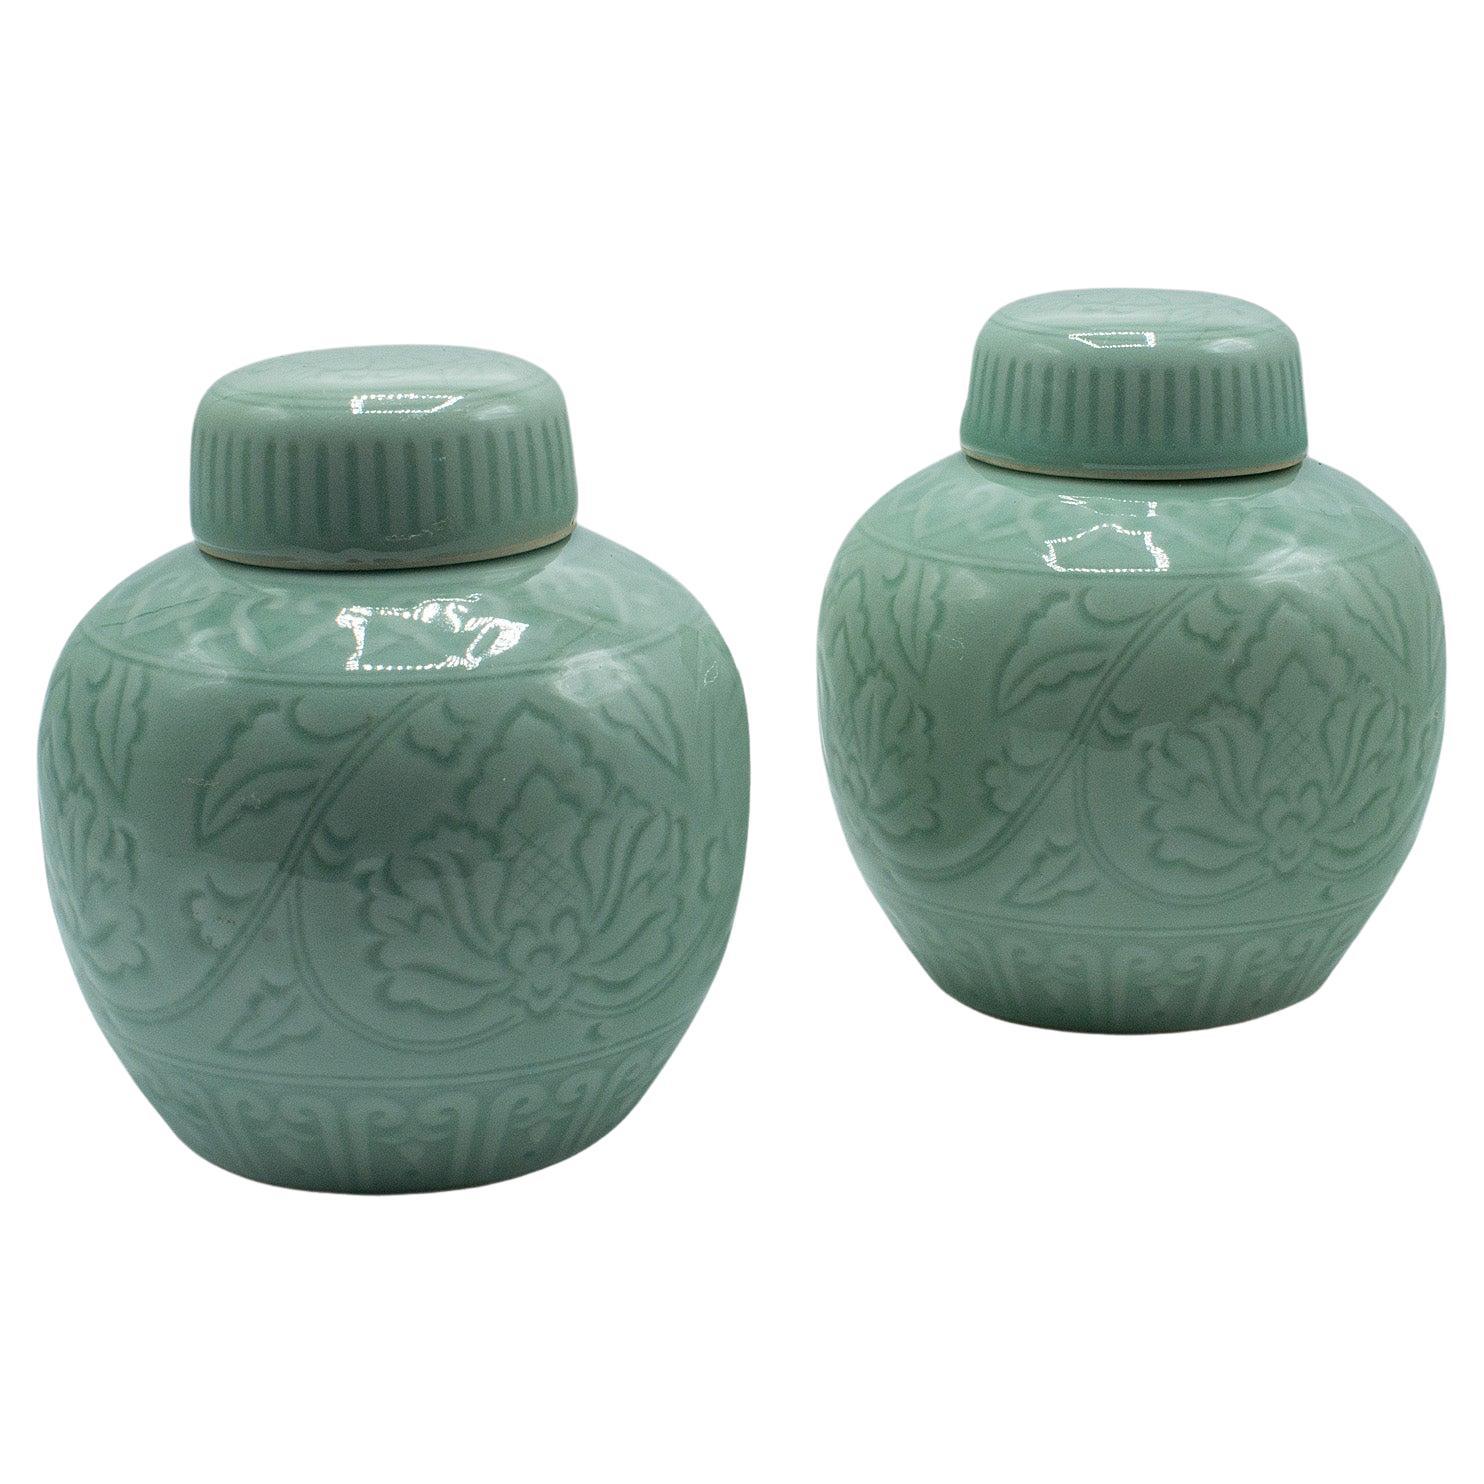 Pair Of Antique Decorative Spice Jars, Chinese, Celadon, Ceramic Pot, Victorian For Sale